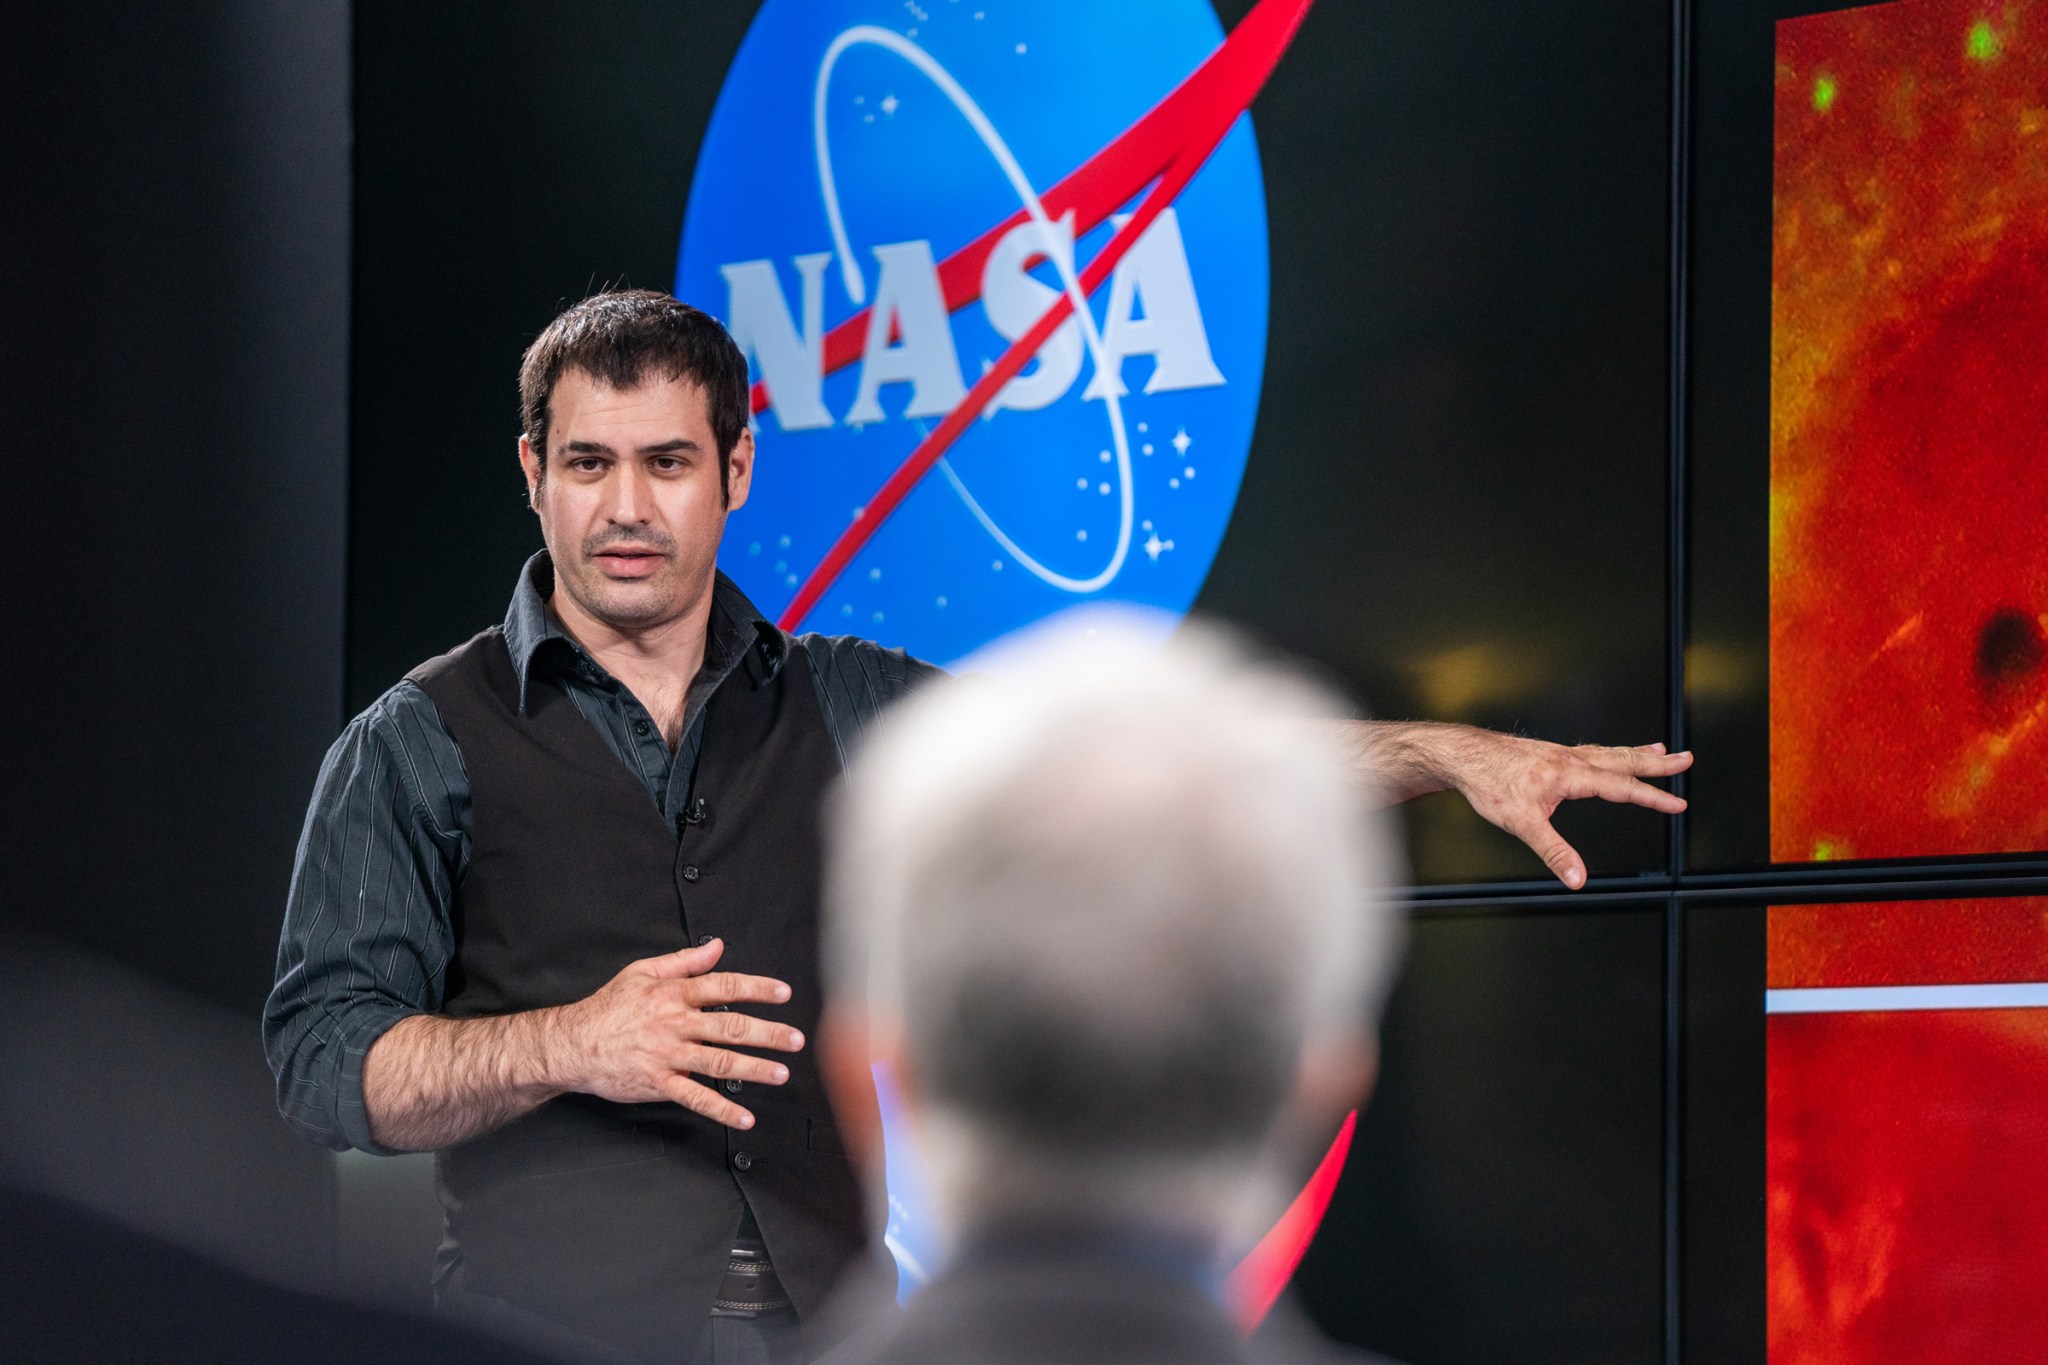 Robert DePalma gestures toward a monitor; NASA logo in background